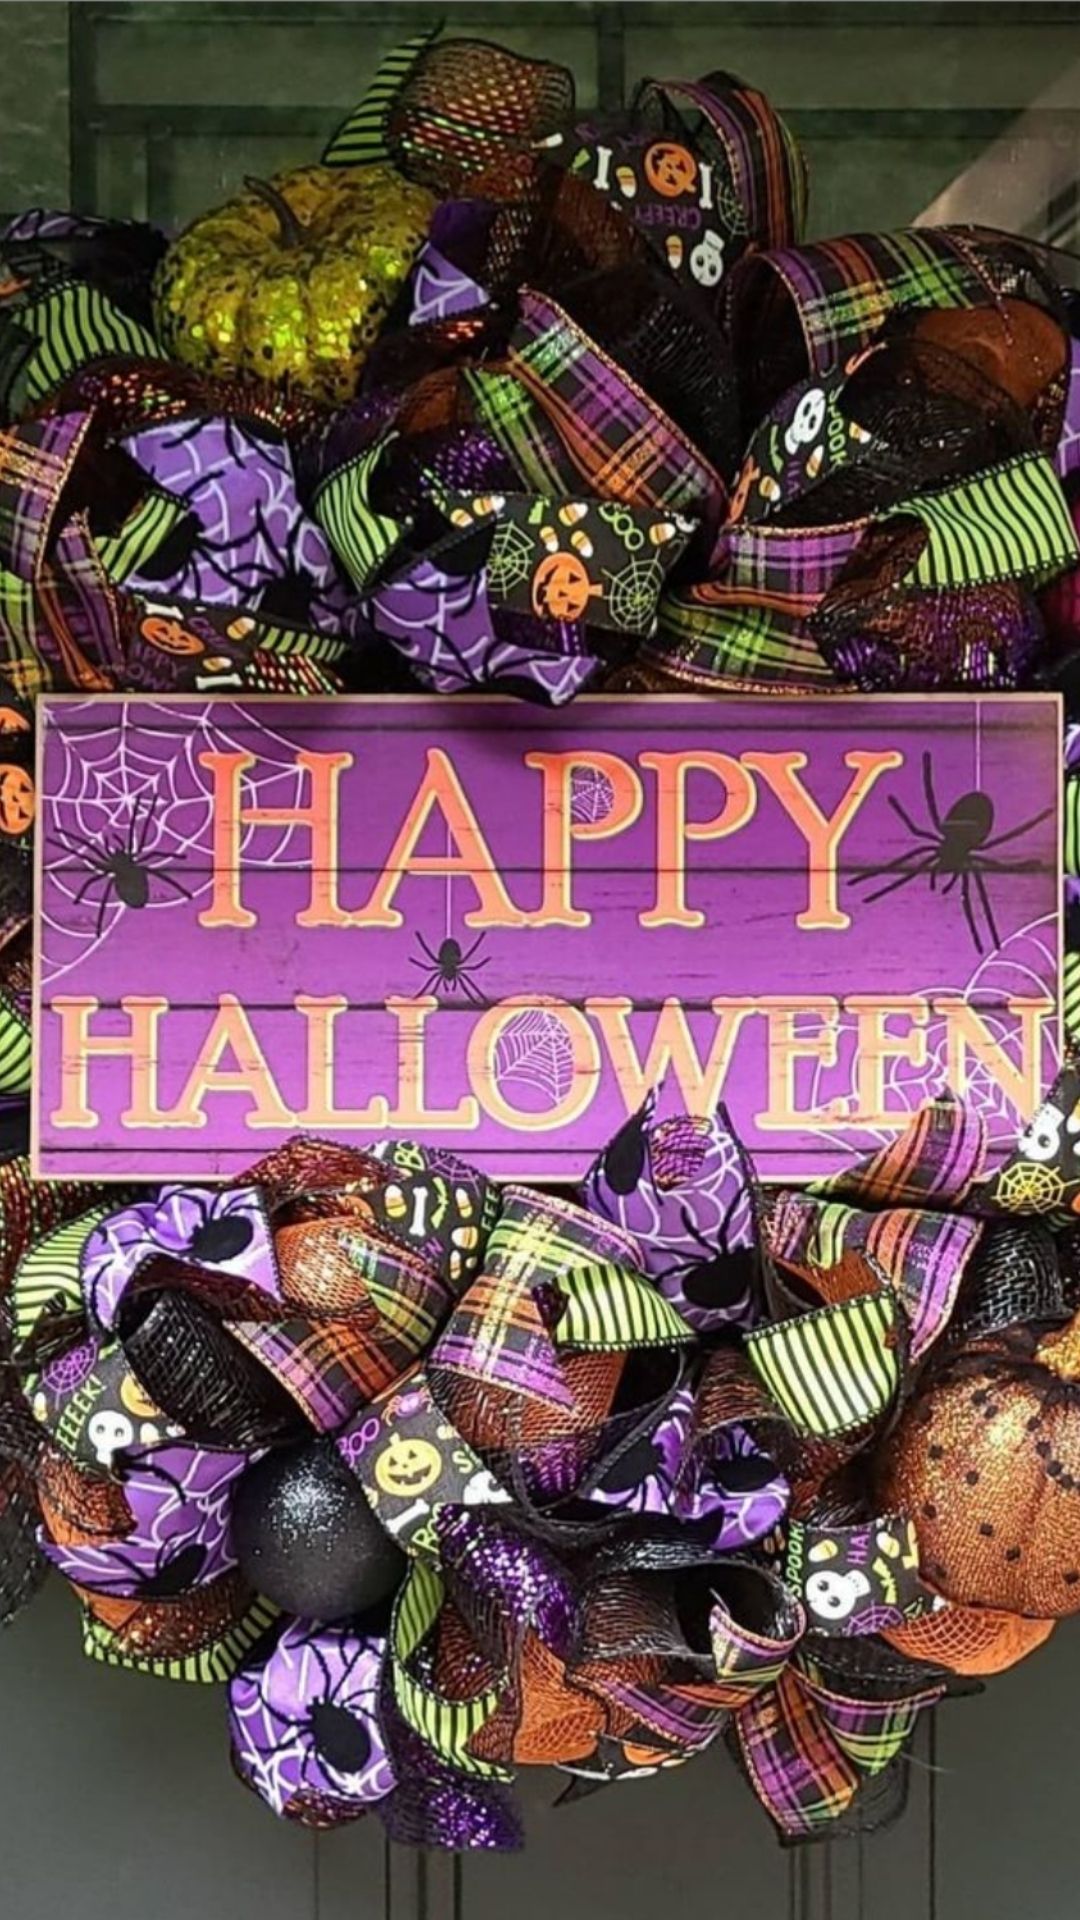 Spookly and creepy DIY Halloween wreath ideas 2021